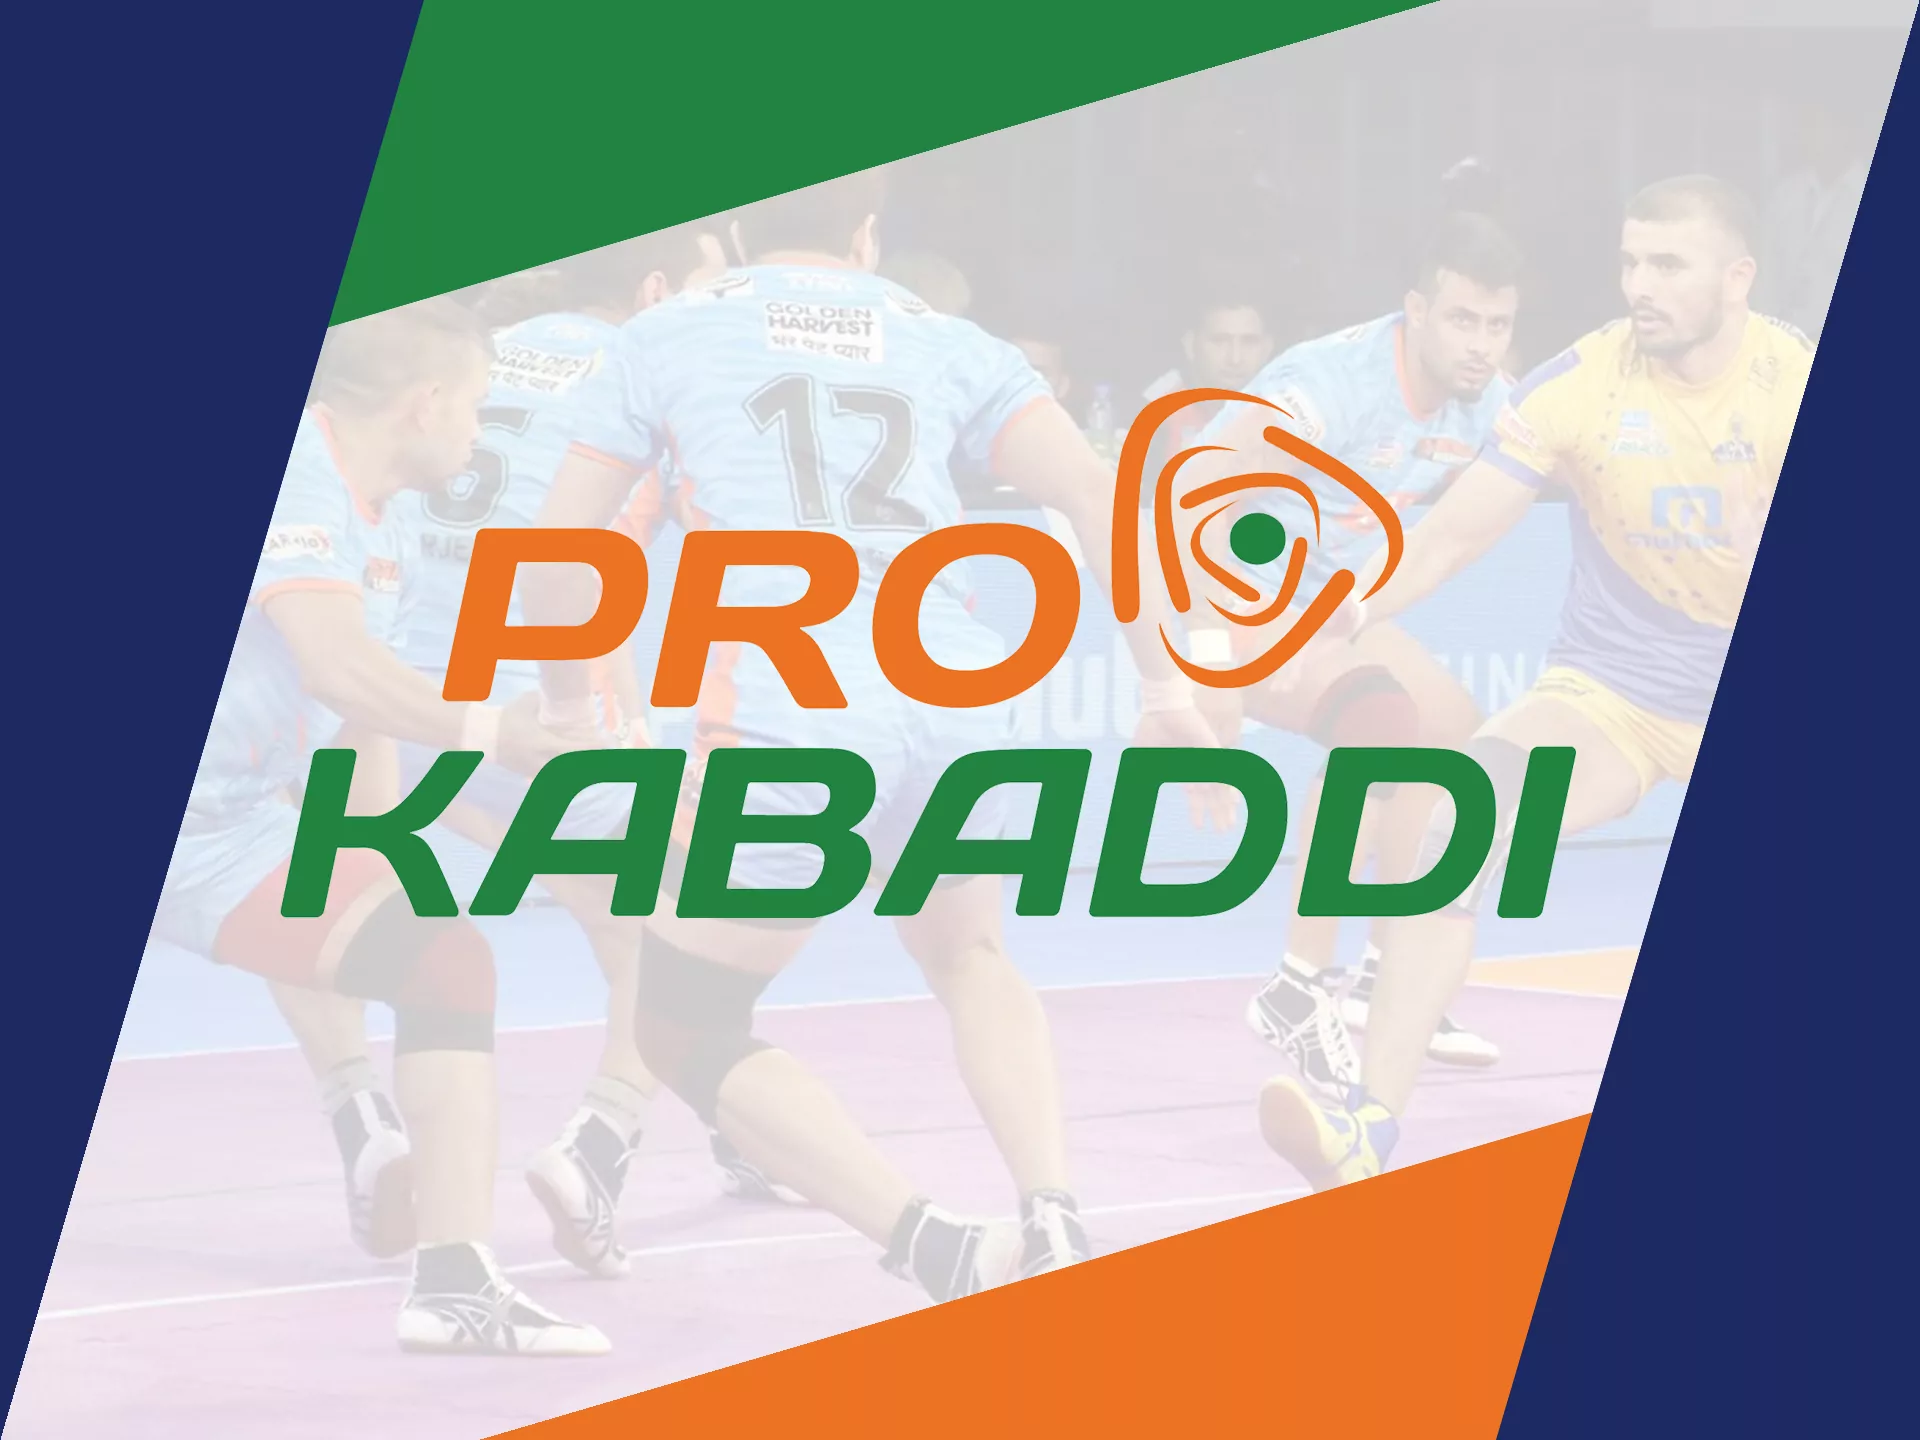 Pro Kabaddi is the most anticipated Kabaddi tournament.